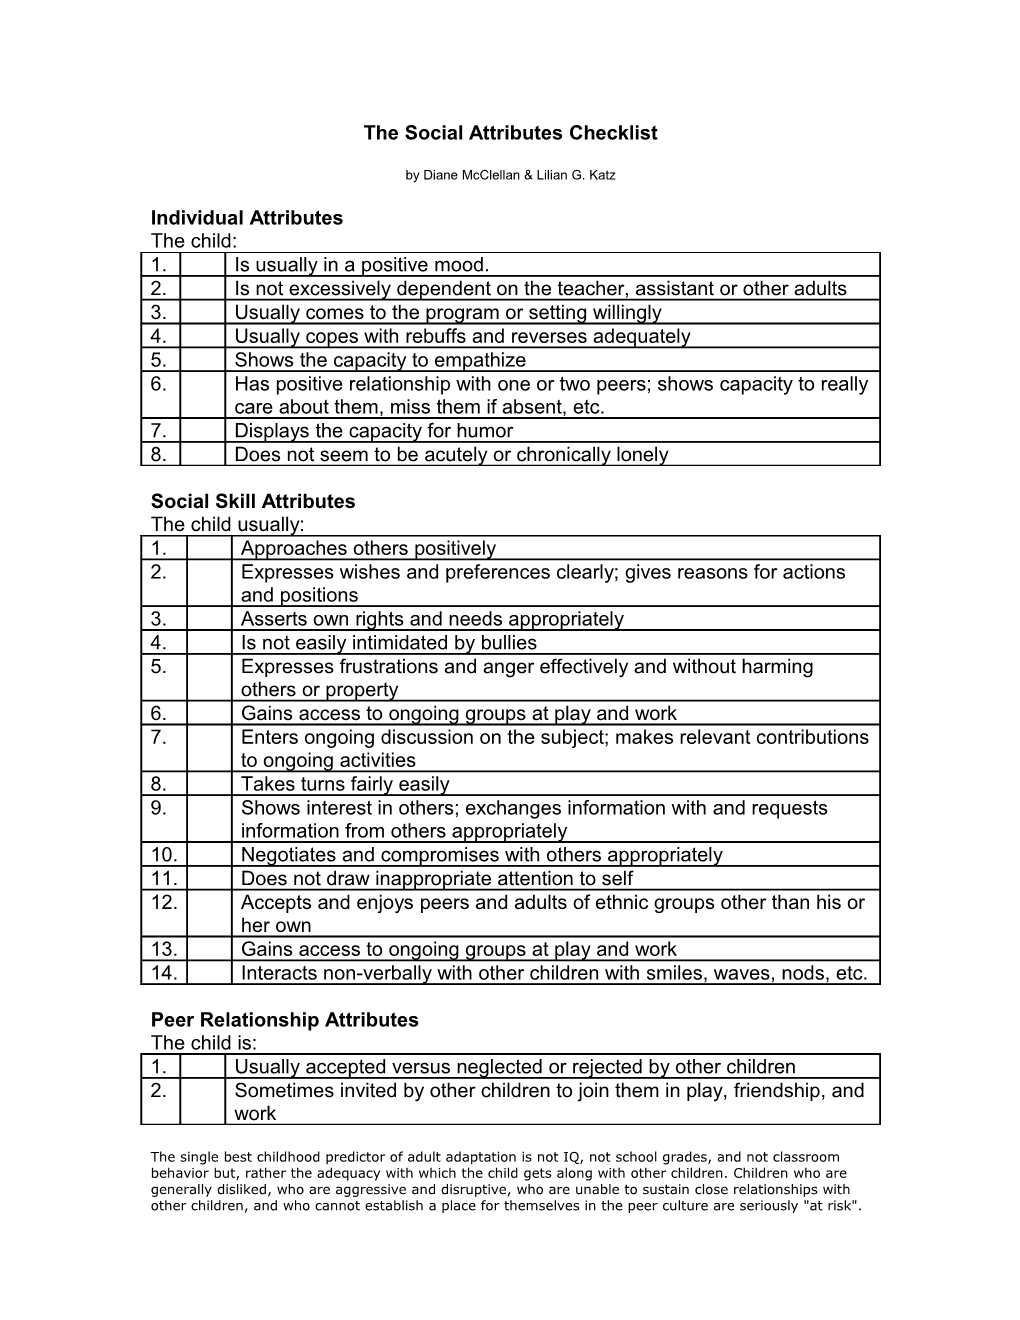 The Social Attributes Checklist s1